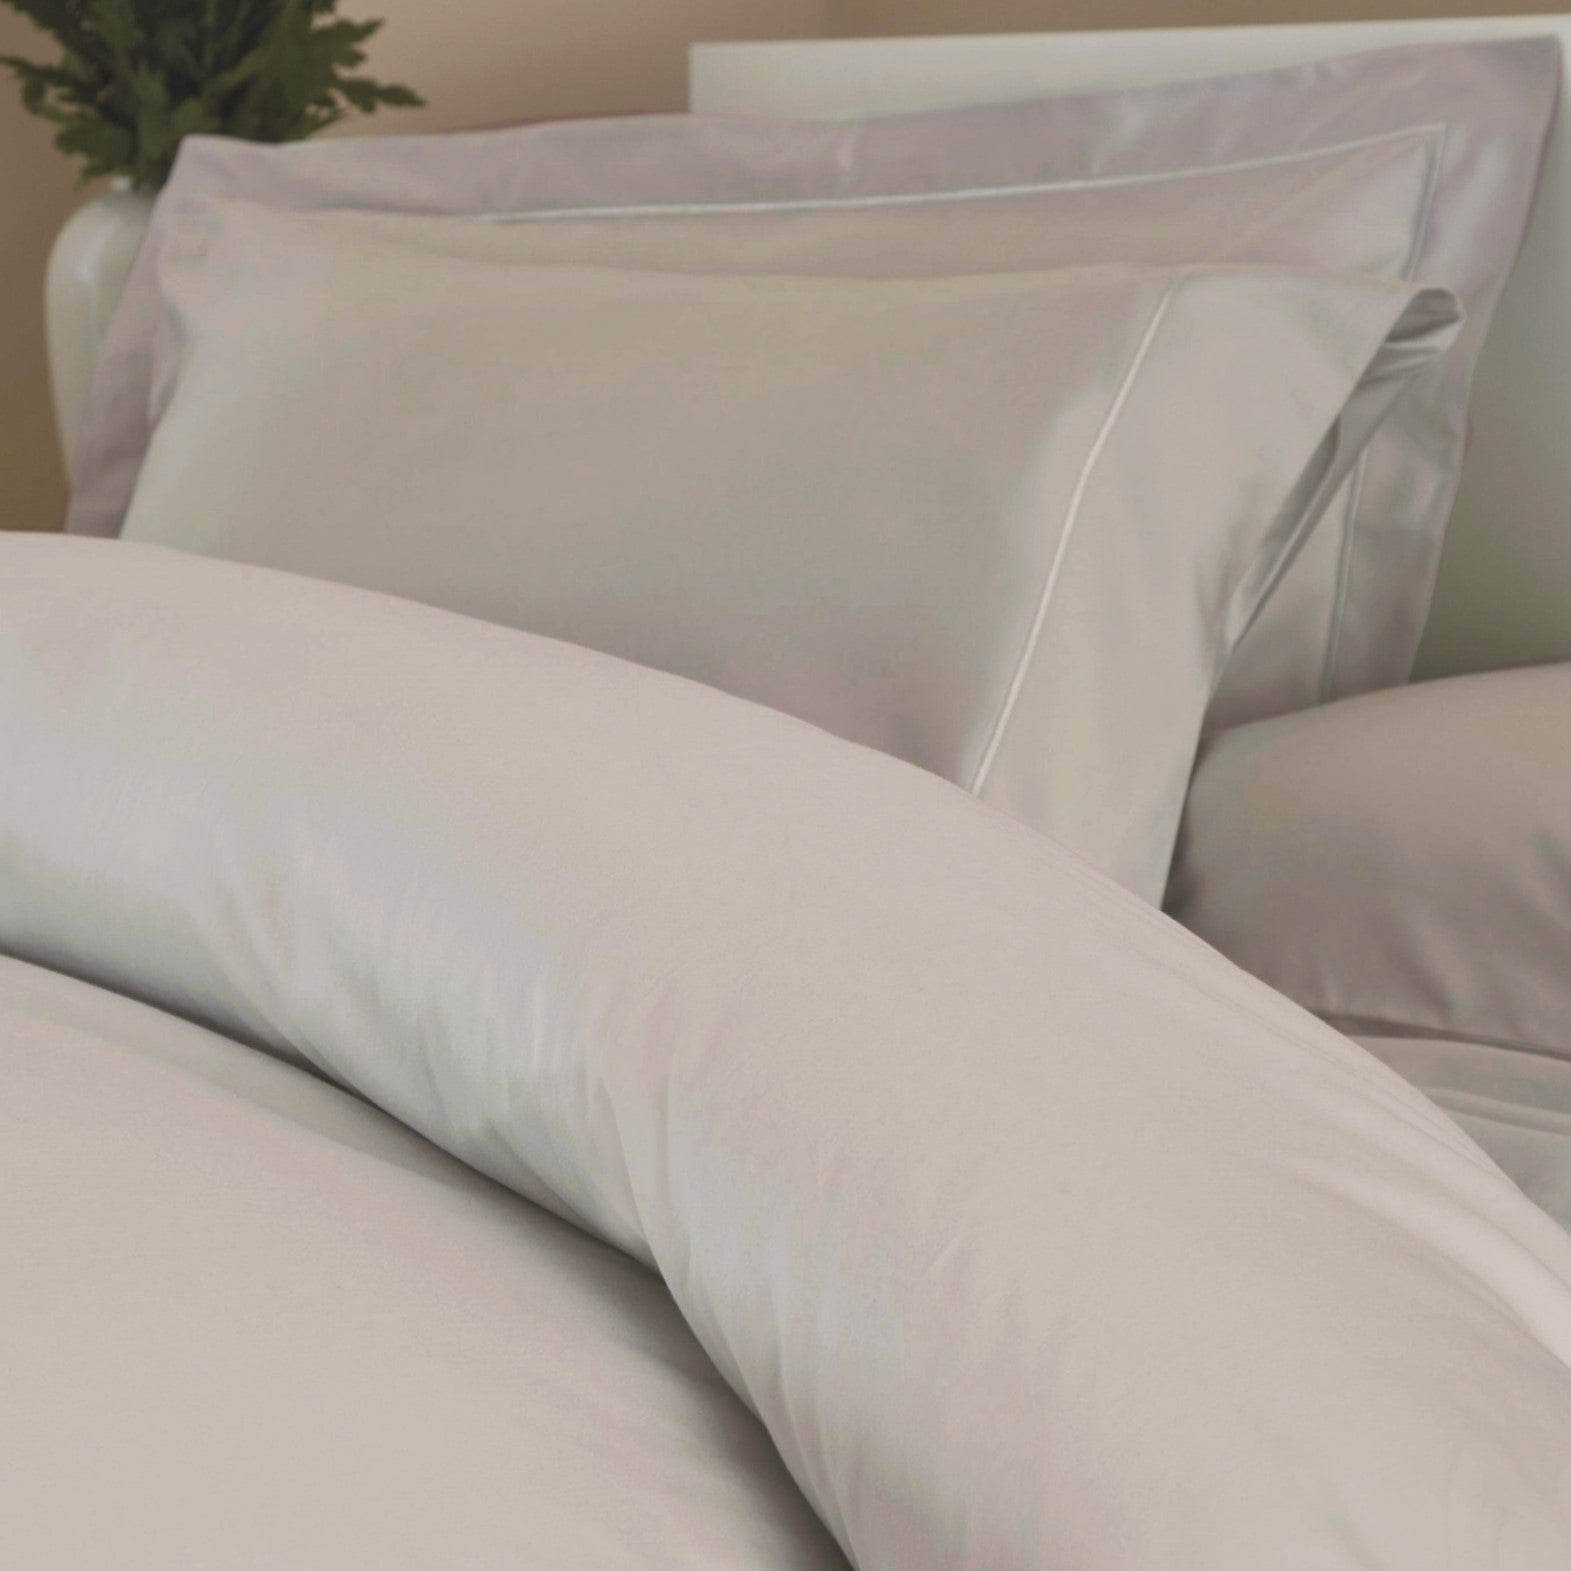 Homeware  -  Egyptian Cotton 400 Count Housewife Pillowcase - Platinum  -  60009935